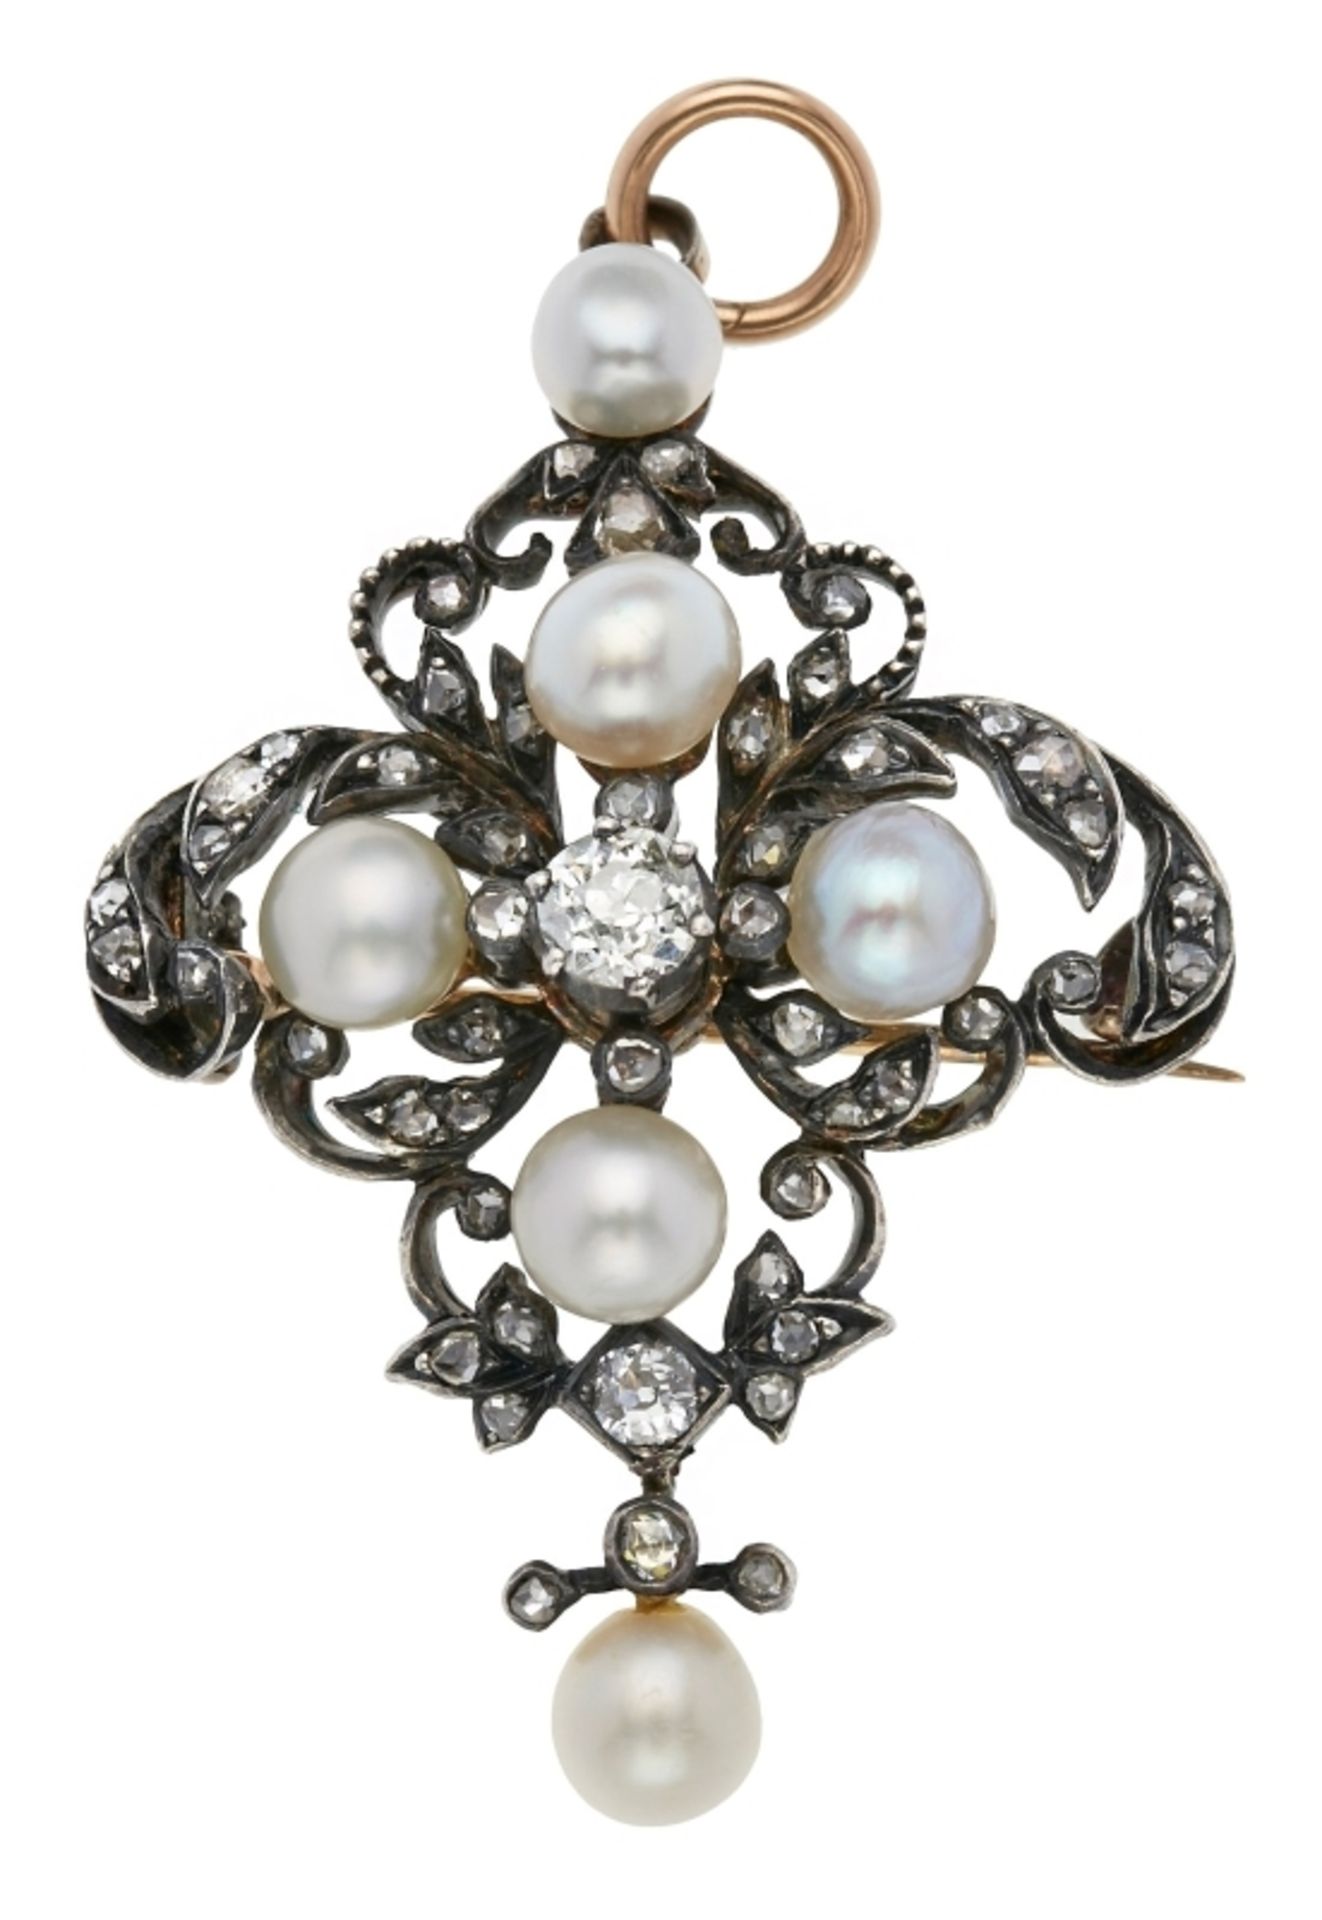 Perl-Diamant-Anhänger/Brosche, Jugendstil um 1900